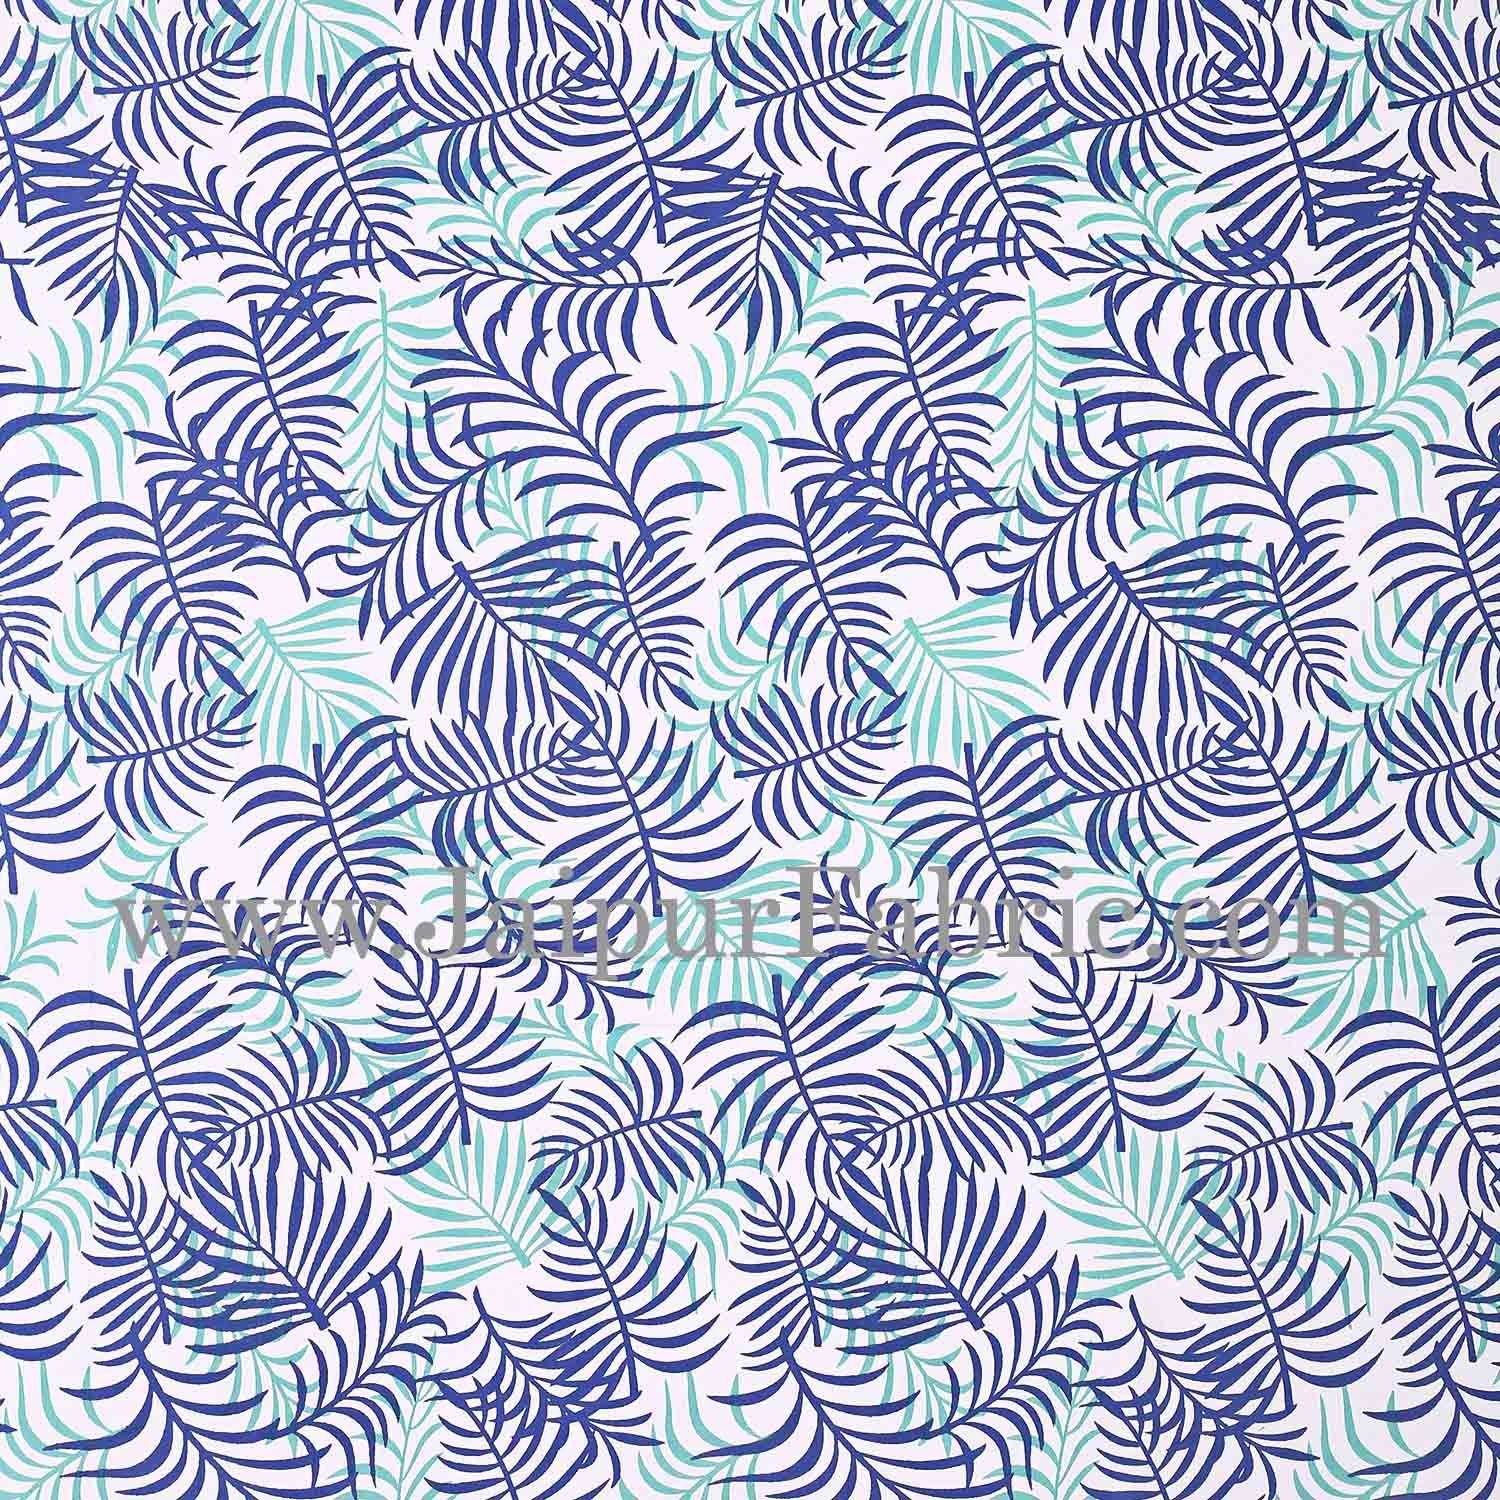 Navy Blur Border Dense Leaf Pattern Cotton Satin Bed Sheet